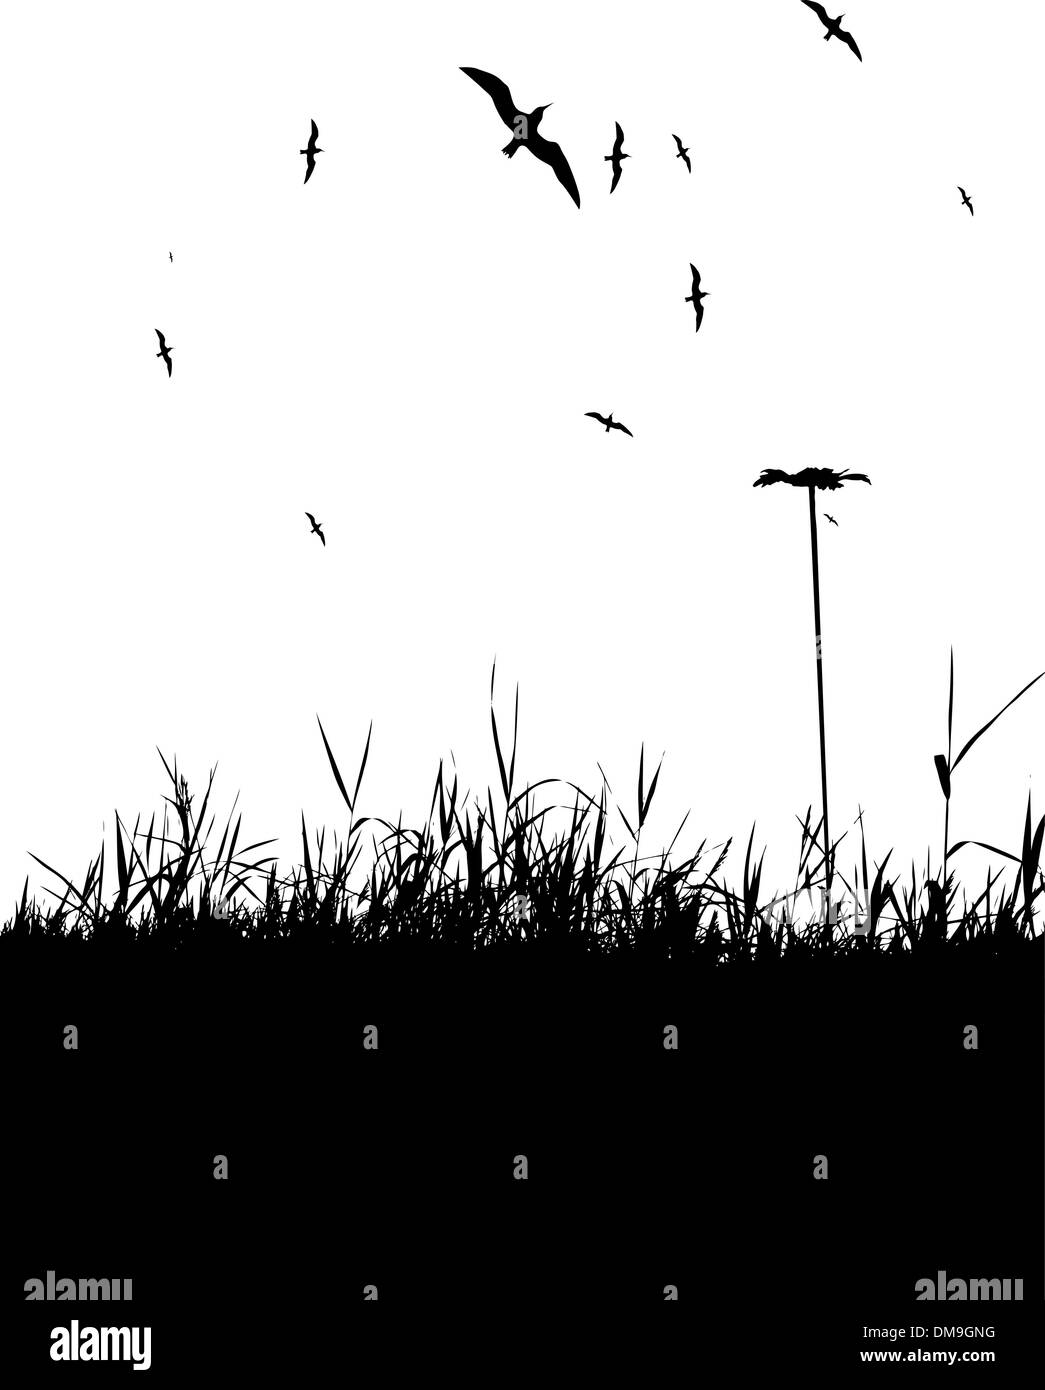 Little girl ispicking flowers on field, black silhouette Stock Vector